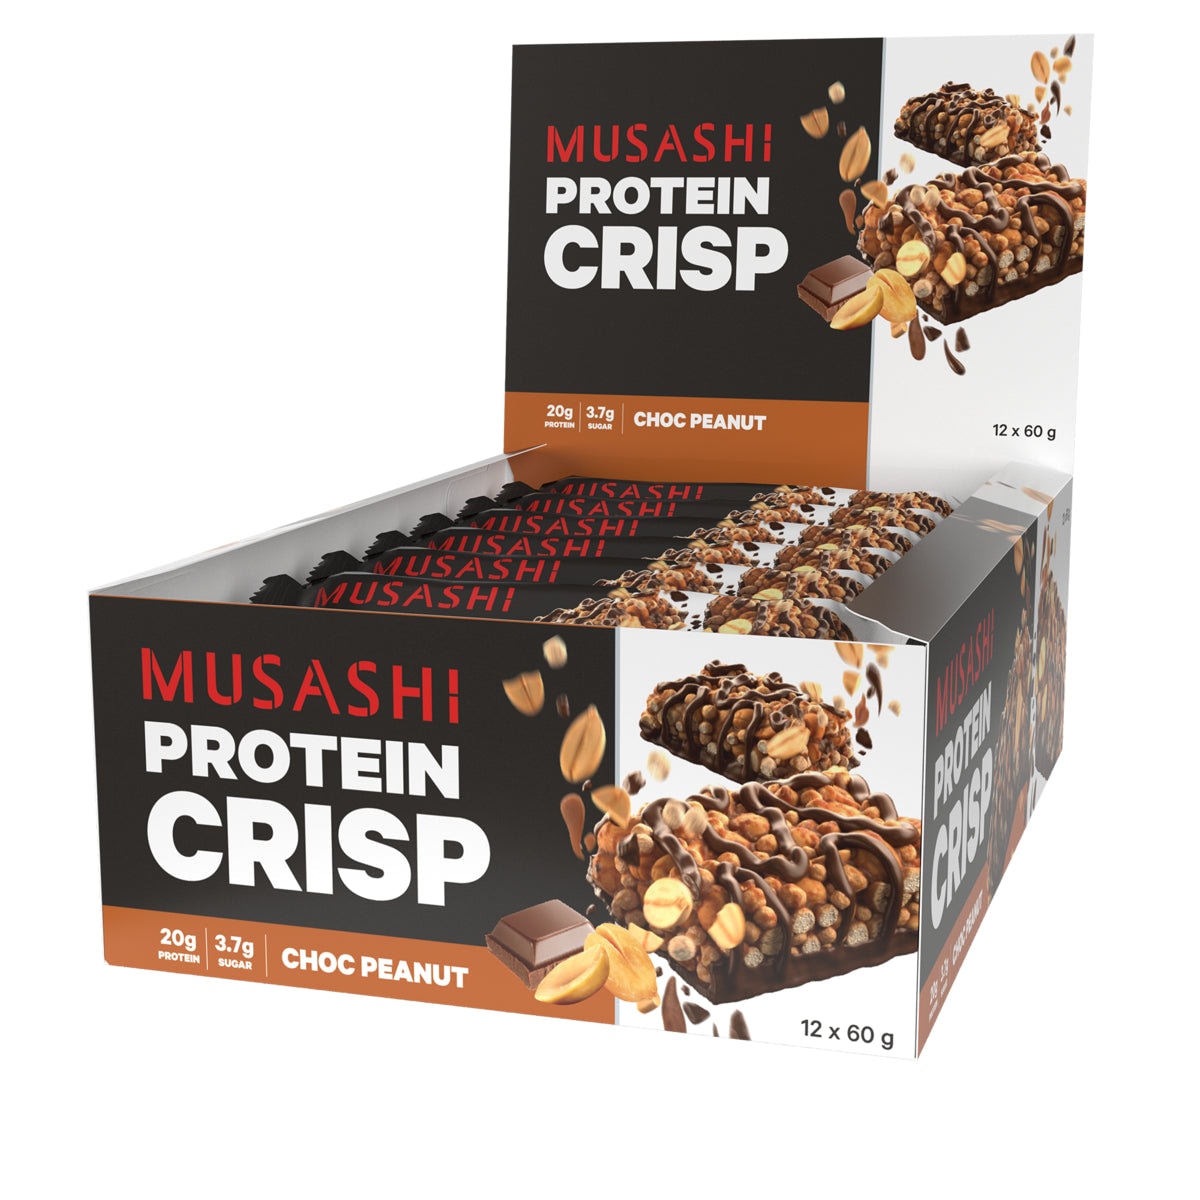 Musashi Choc Peanut Protein Crisp Bar 12 x 60g Australia